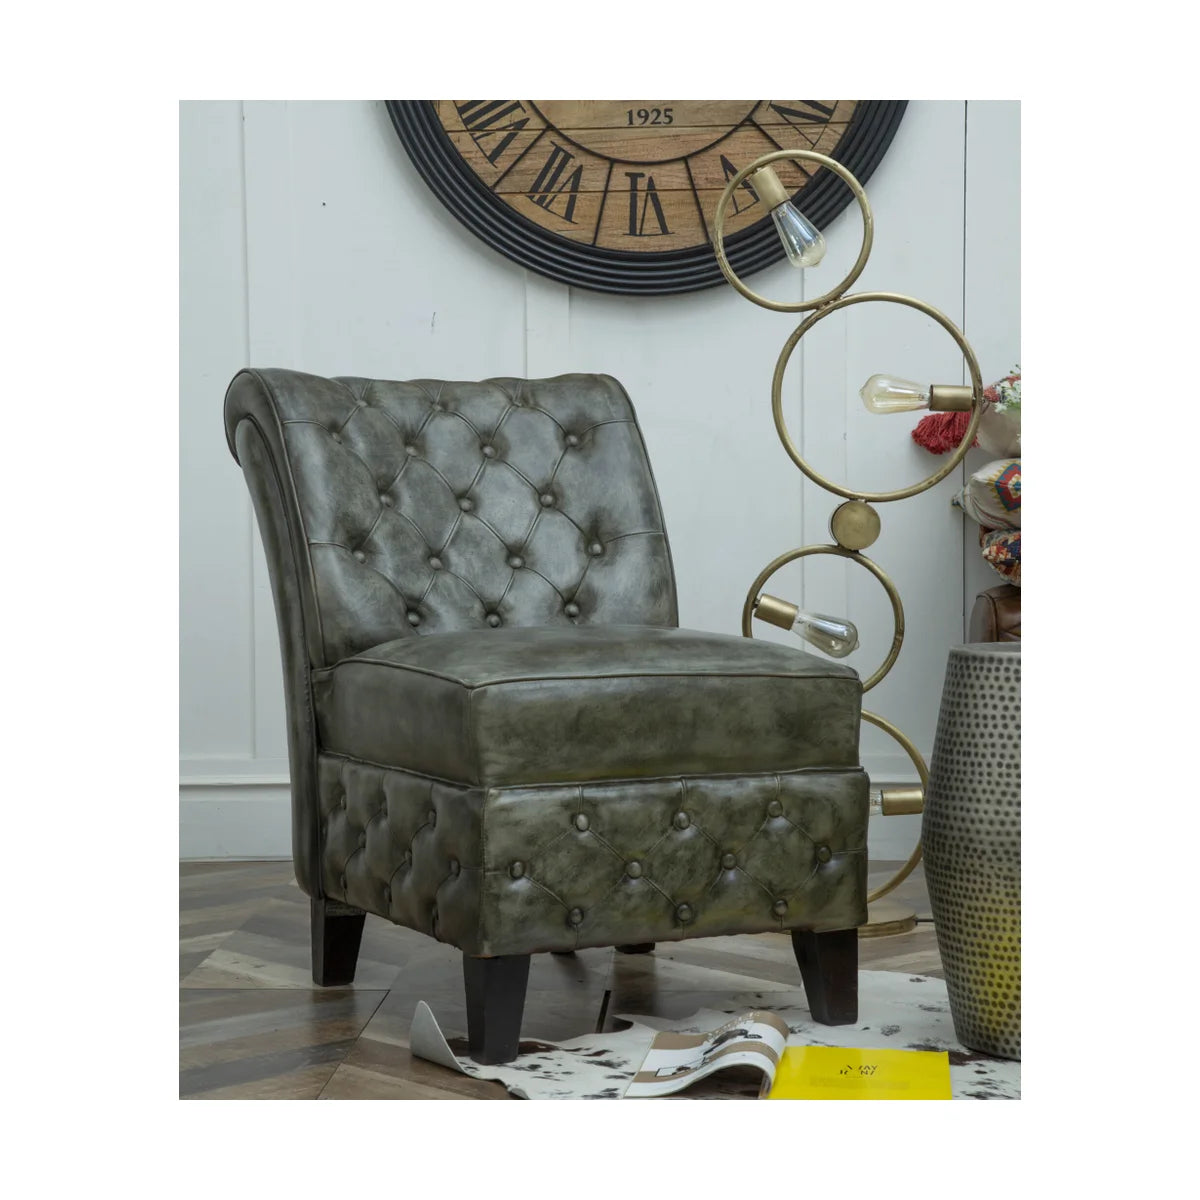 Diamond tufted leather chair